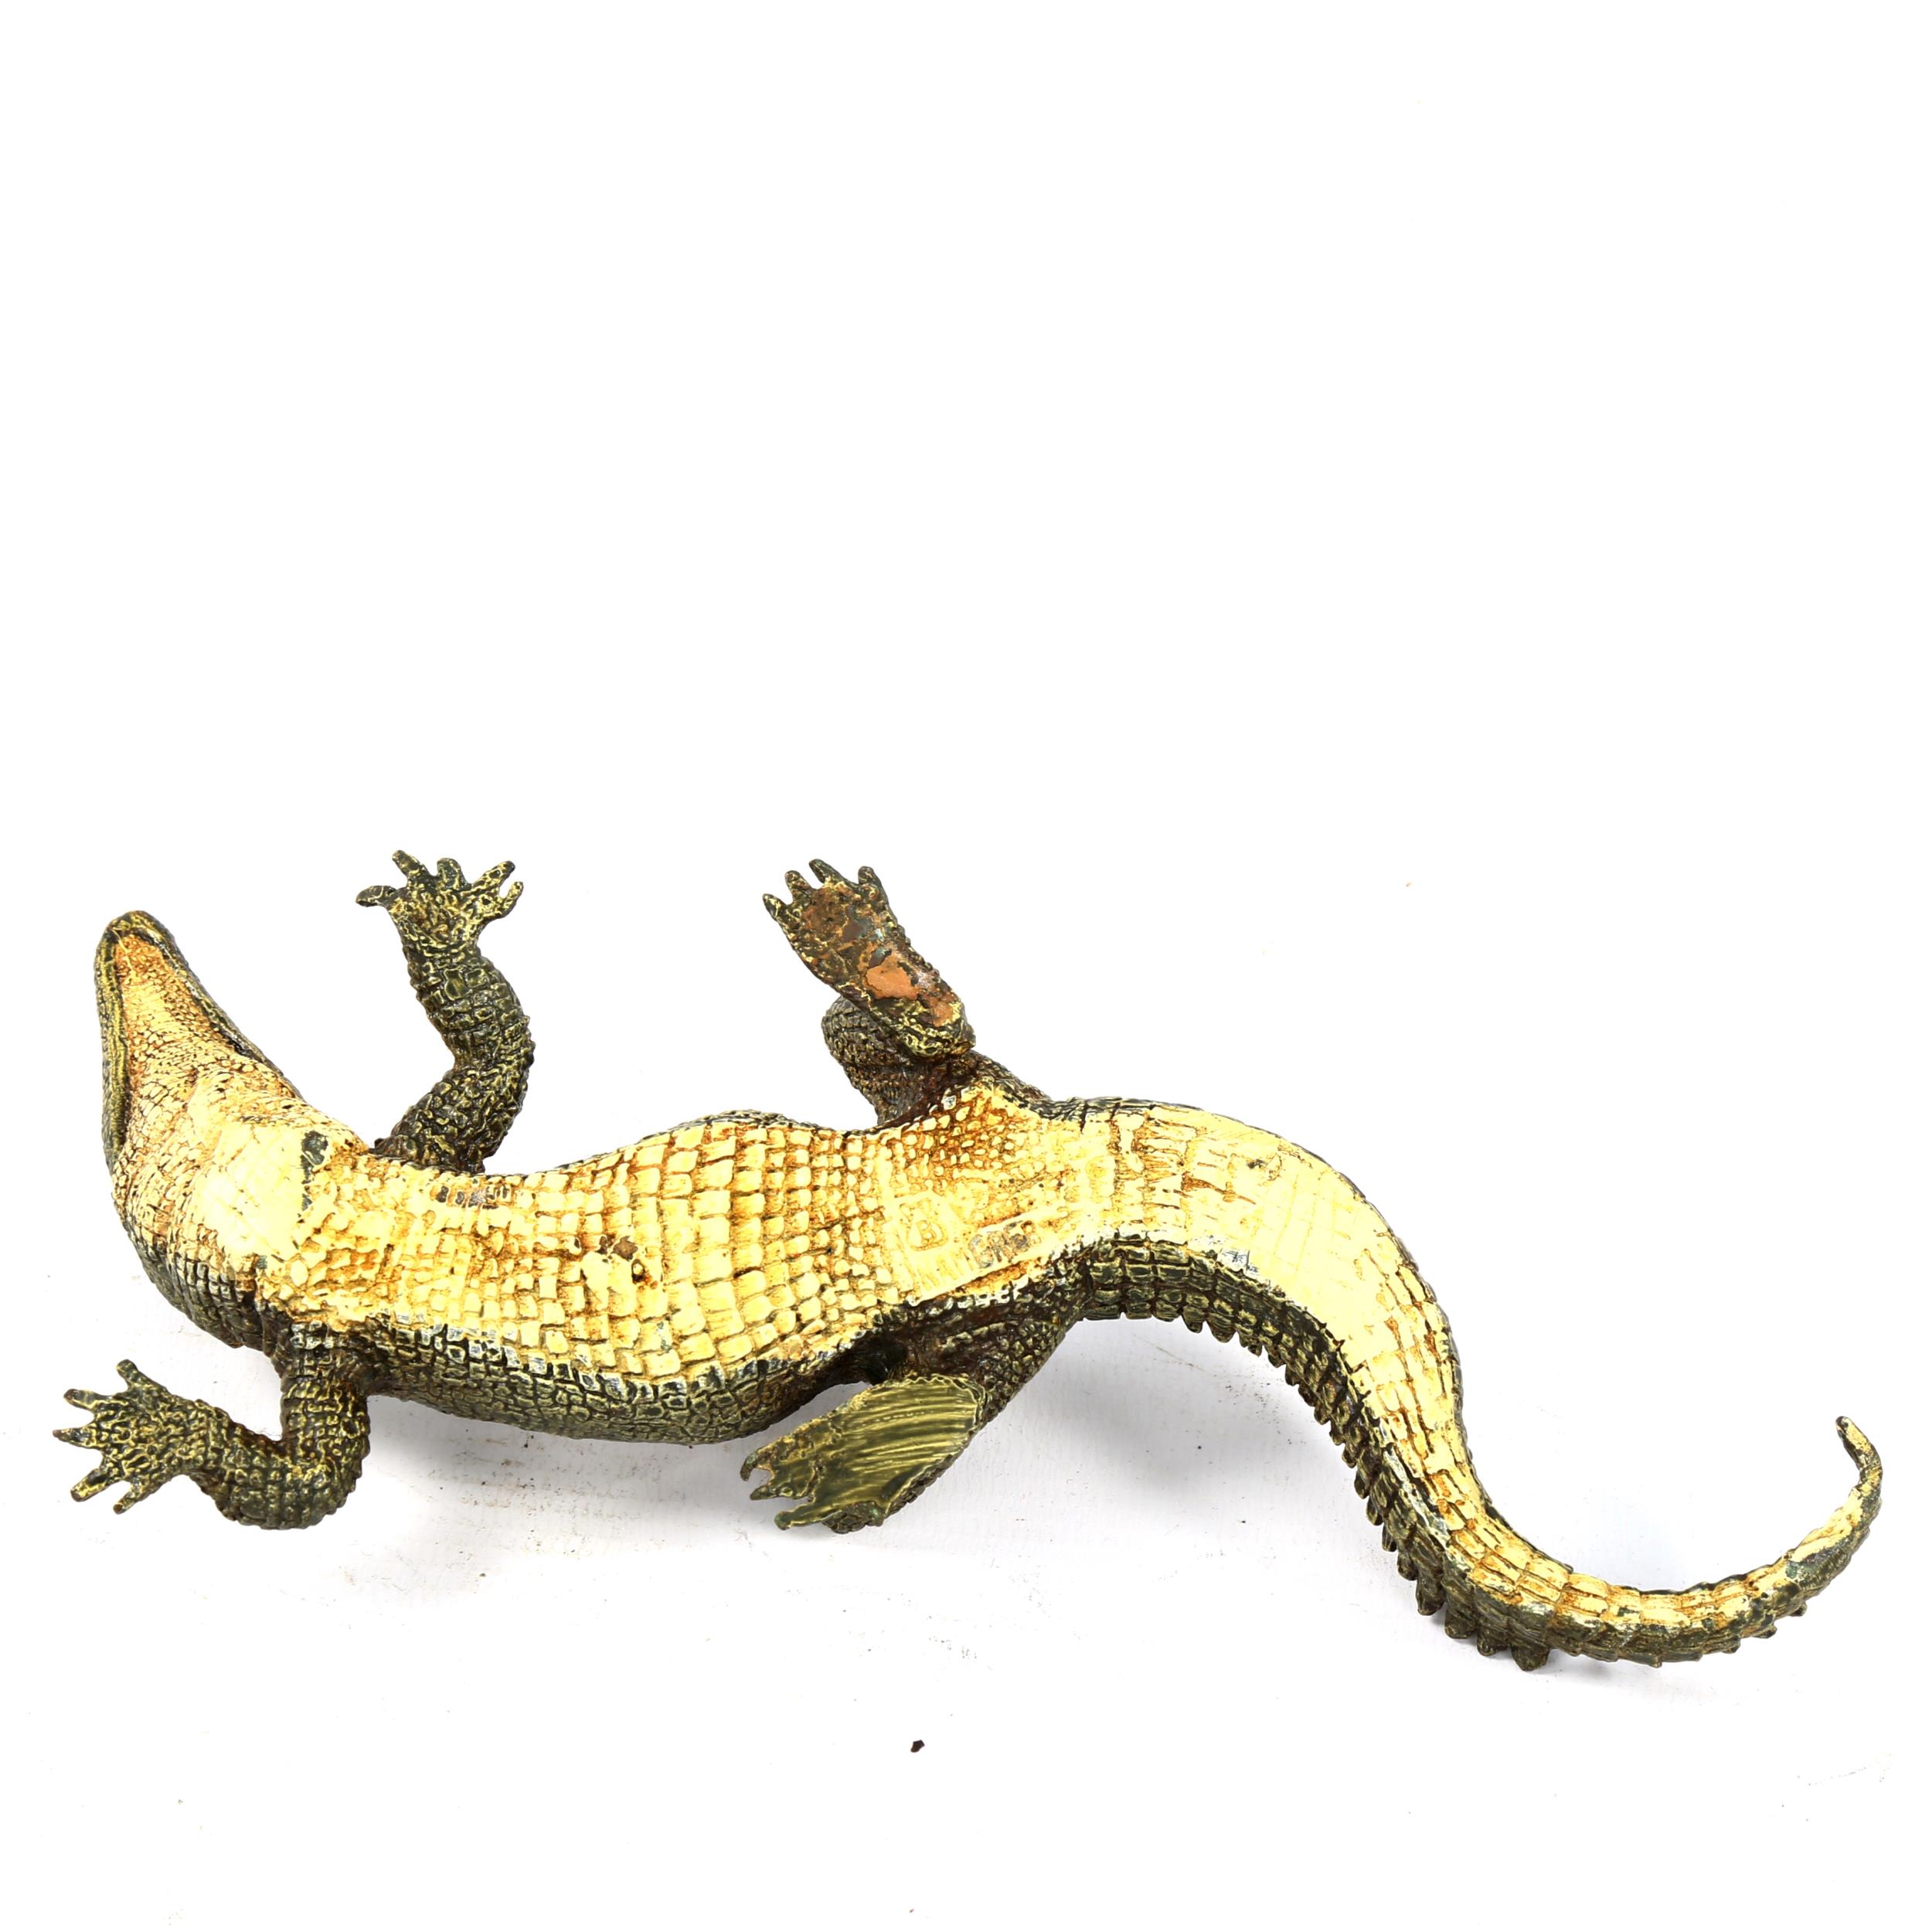 Bergmann style cold painted bronze alligator, length 20cm - Image 3 of 3